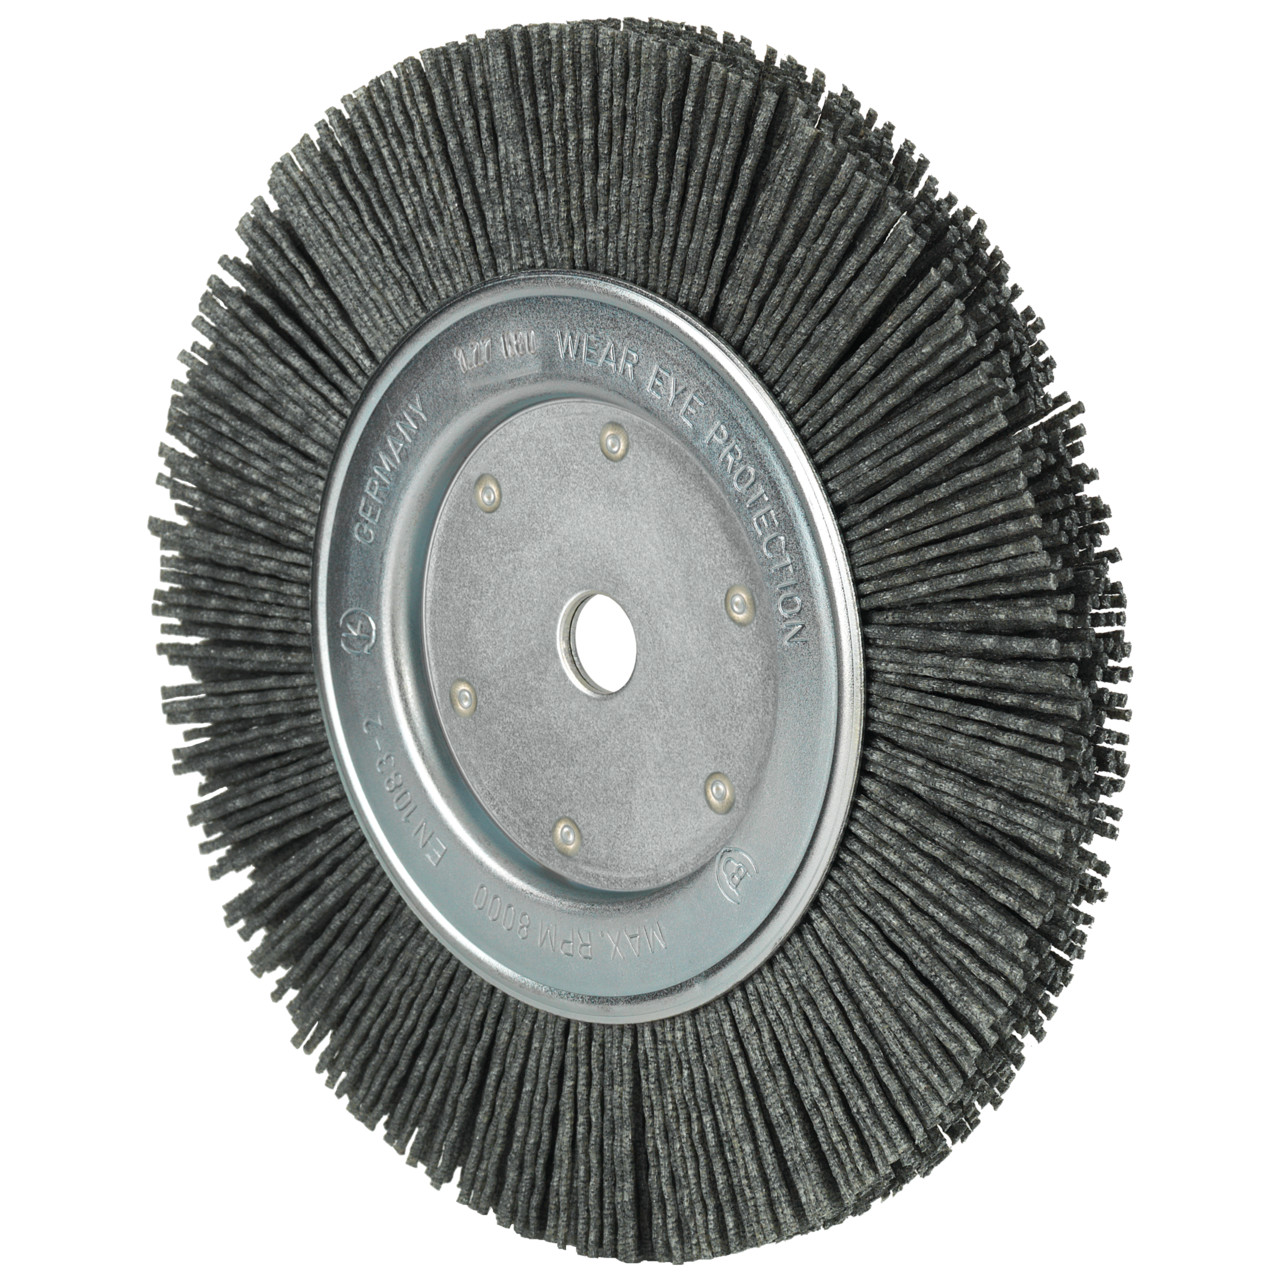 Tyrolit Escobillas de rueda DxAxLxH 125x13x22x20 Para uso universal, forma: 1RDK - (escobillas de rueda), Art. 34043577